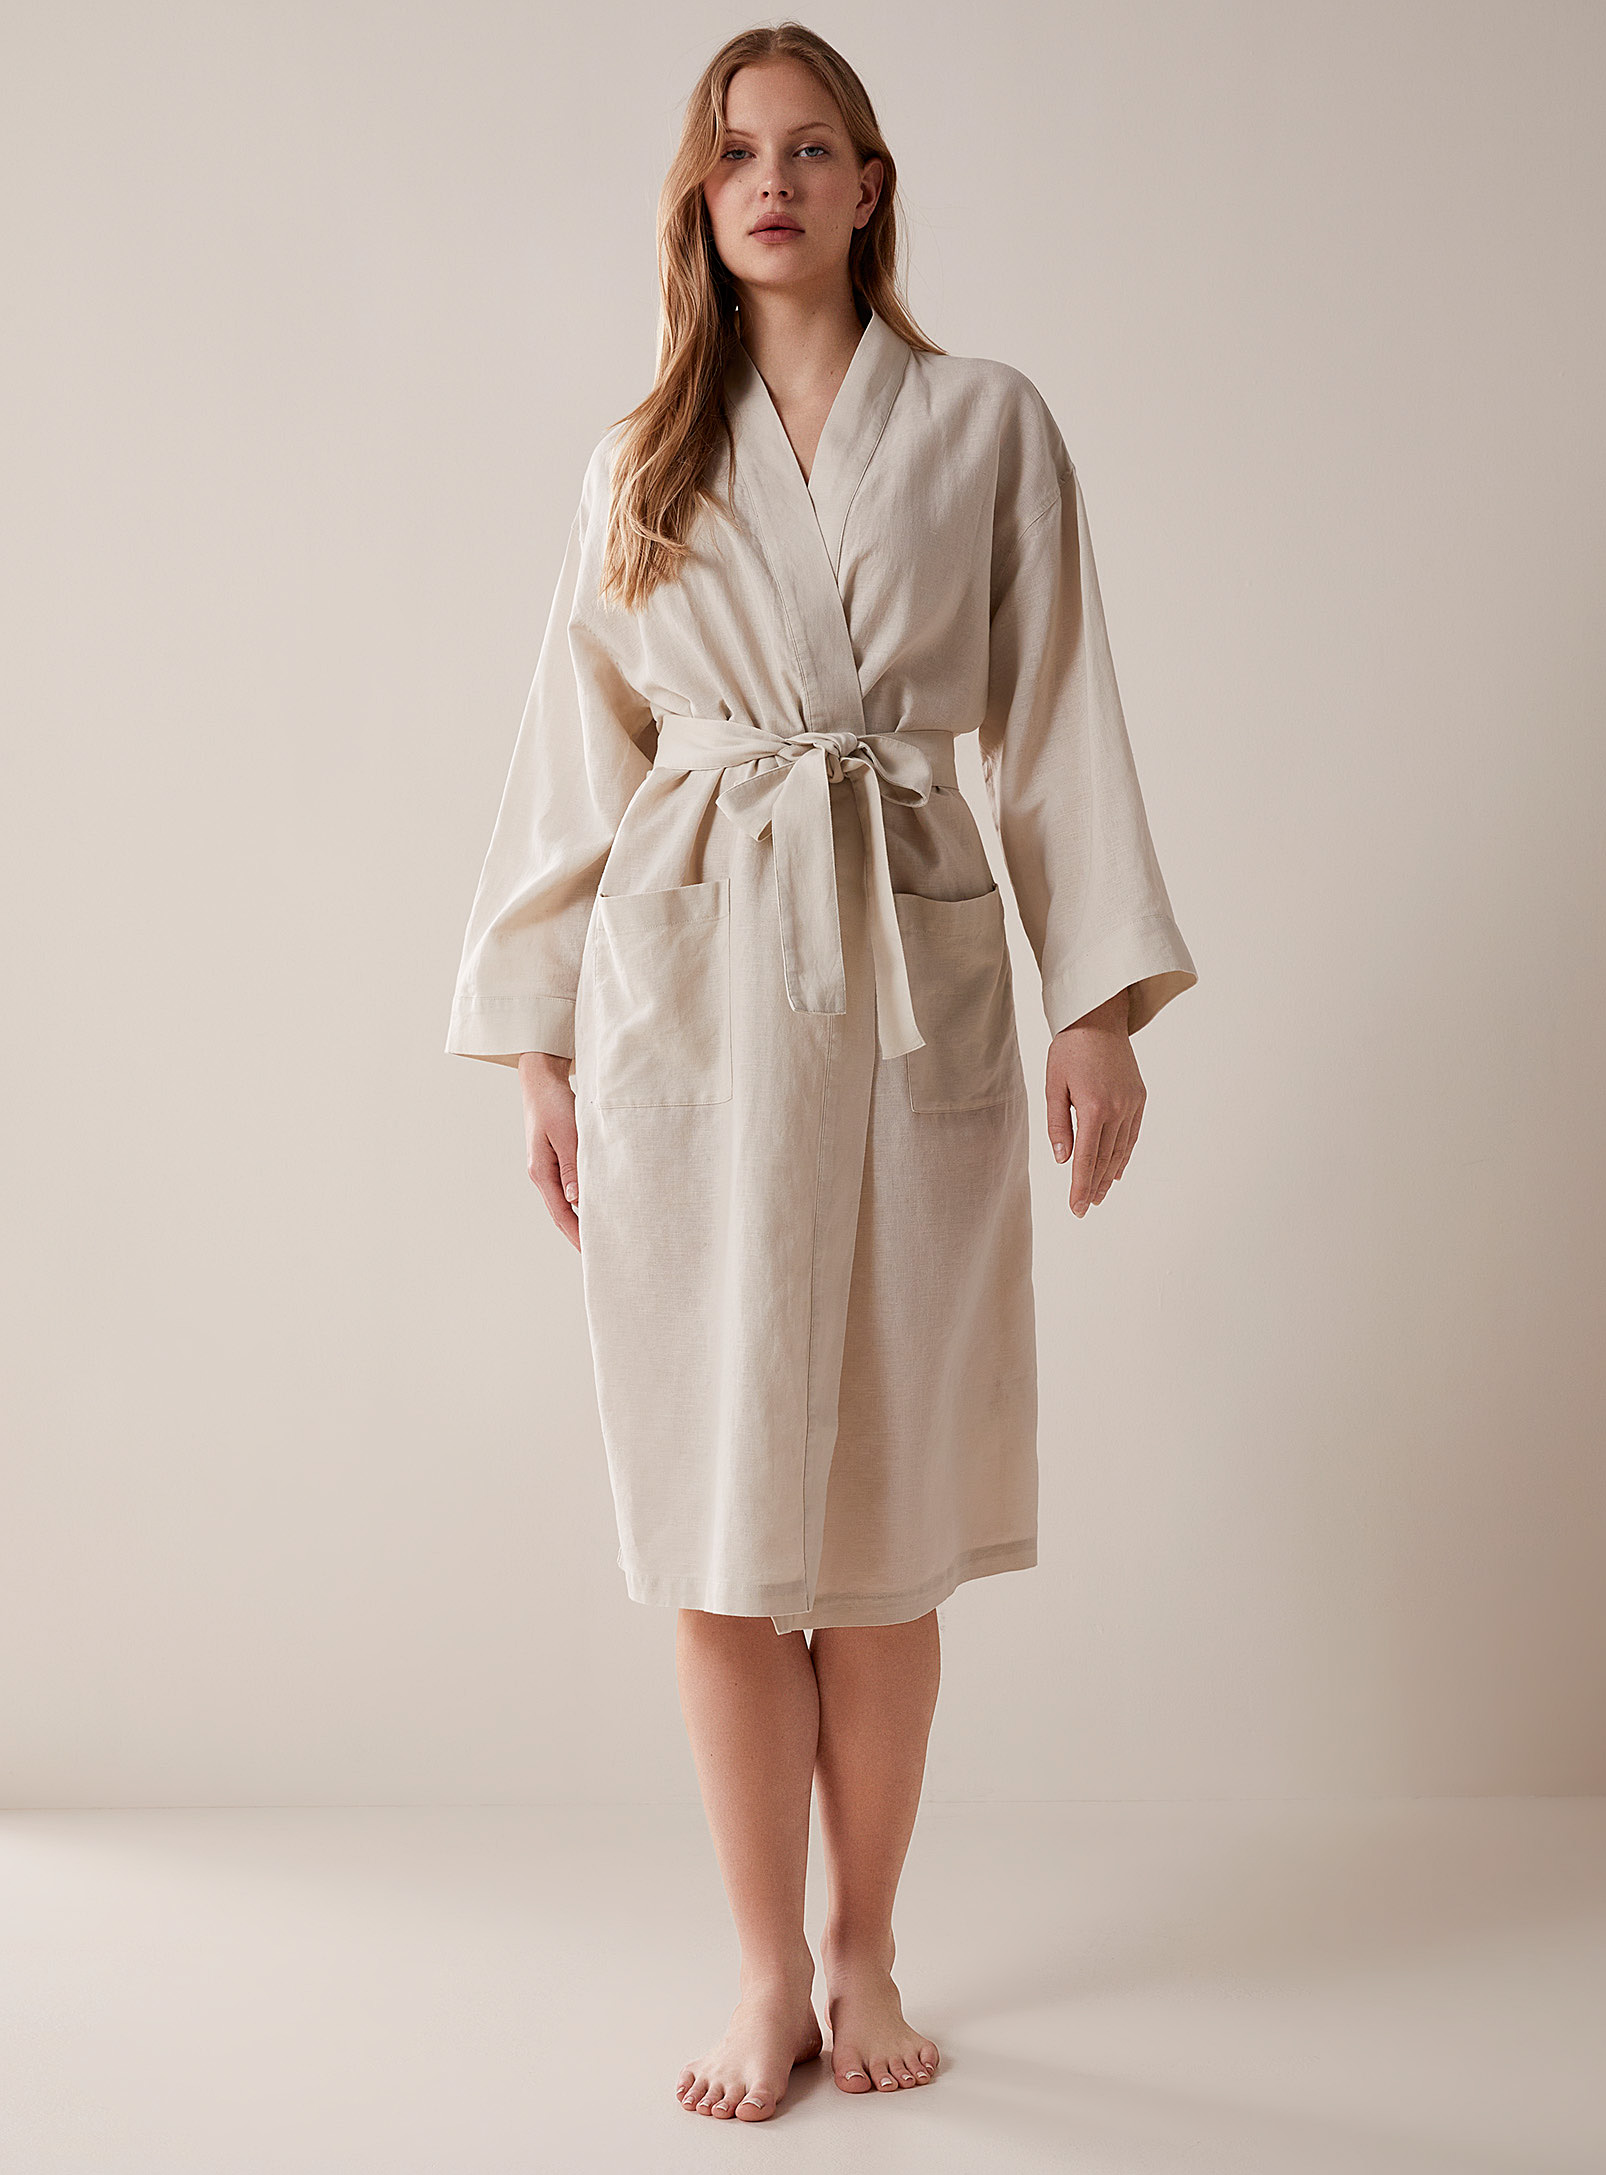 Miiyu Plain Linen And Cotton Long Robe In Ivory/cream Beige